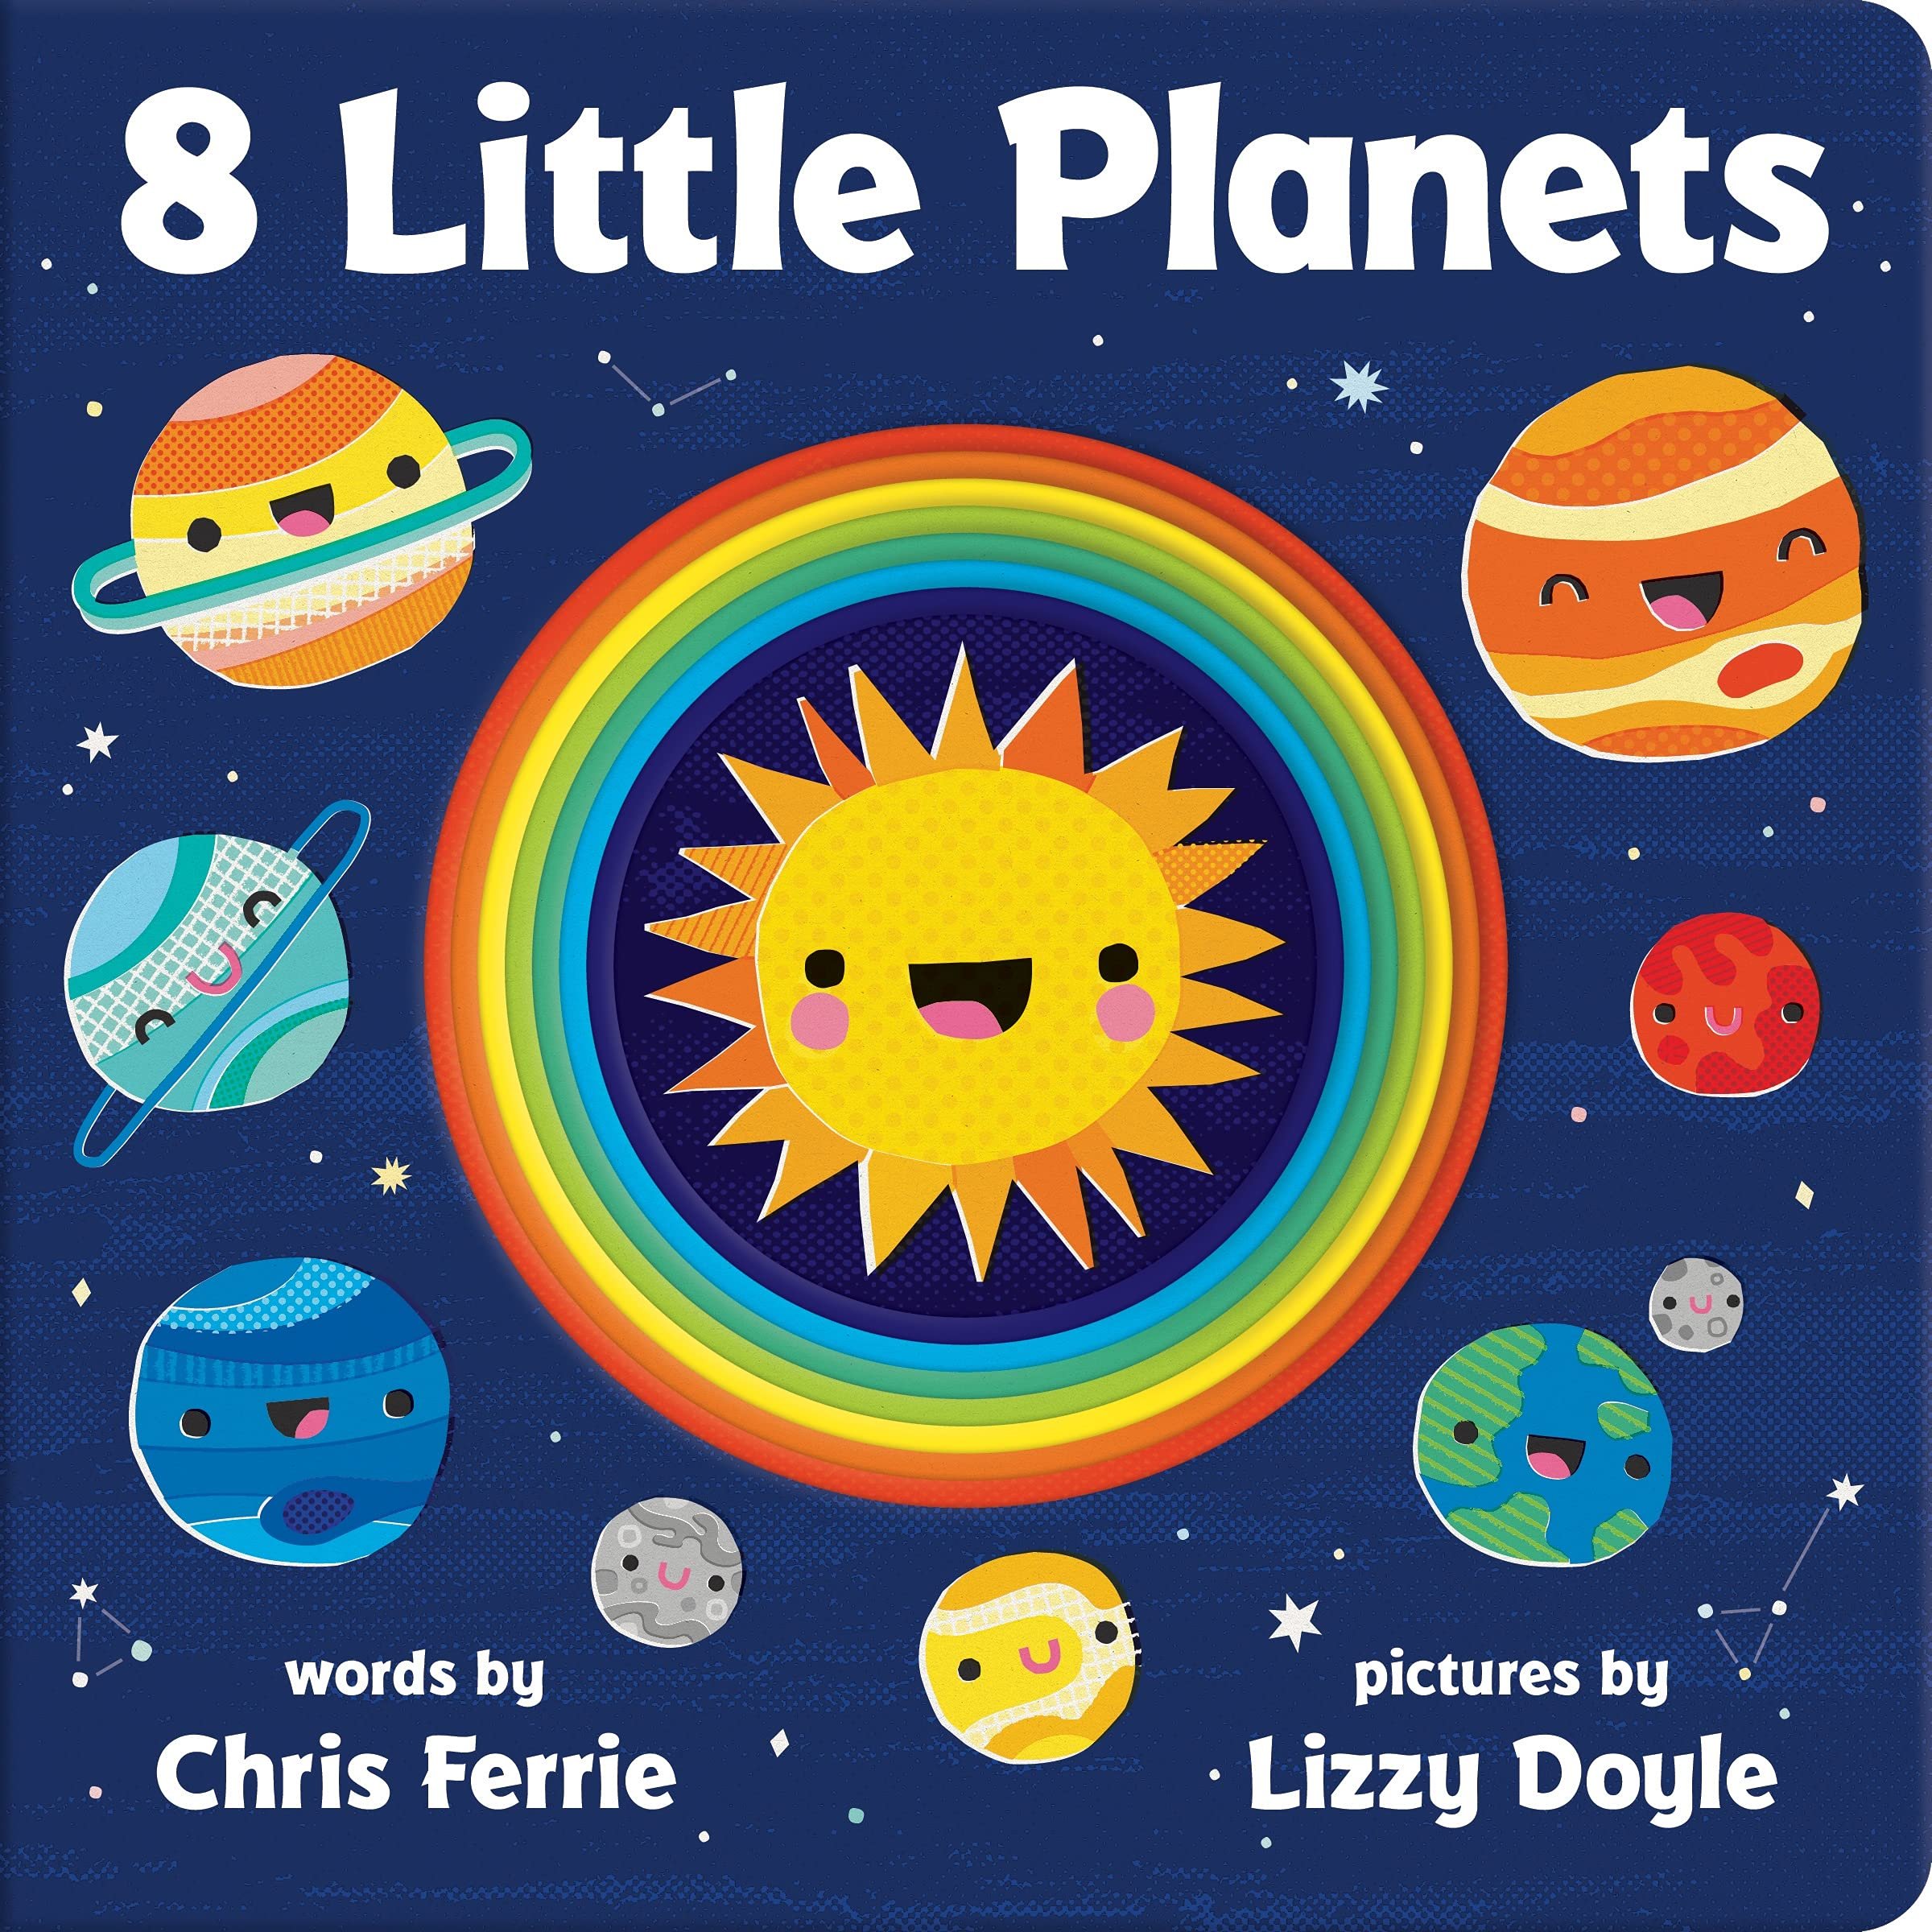 8 Little Planets.jpeg